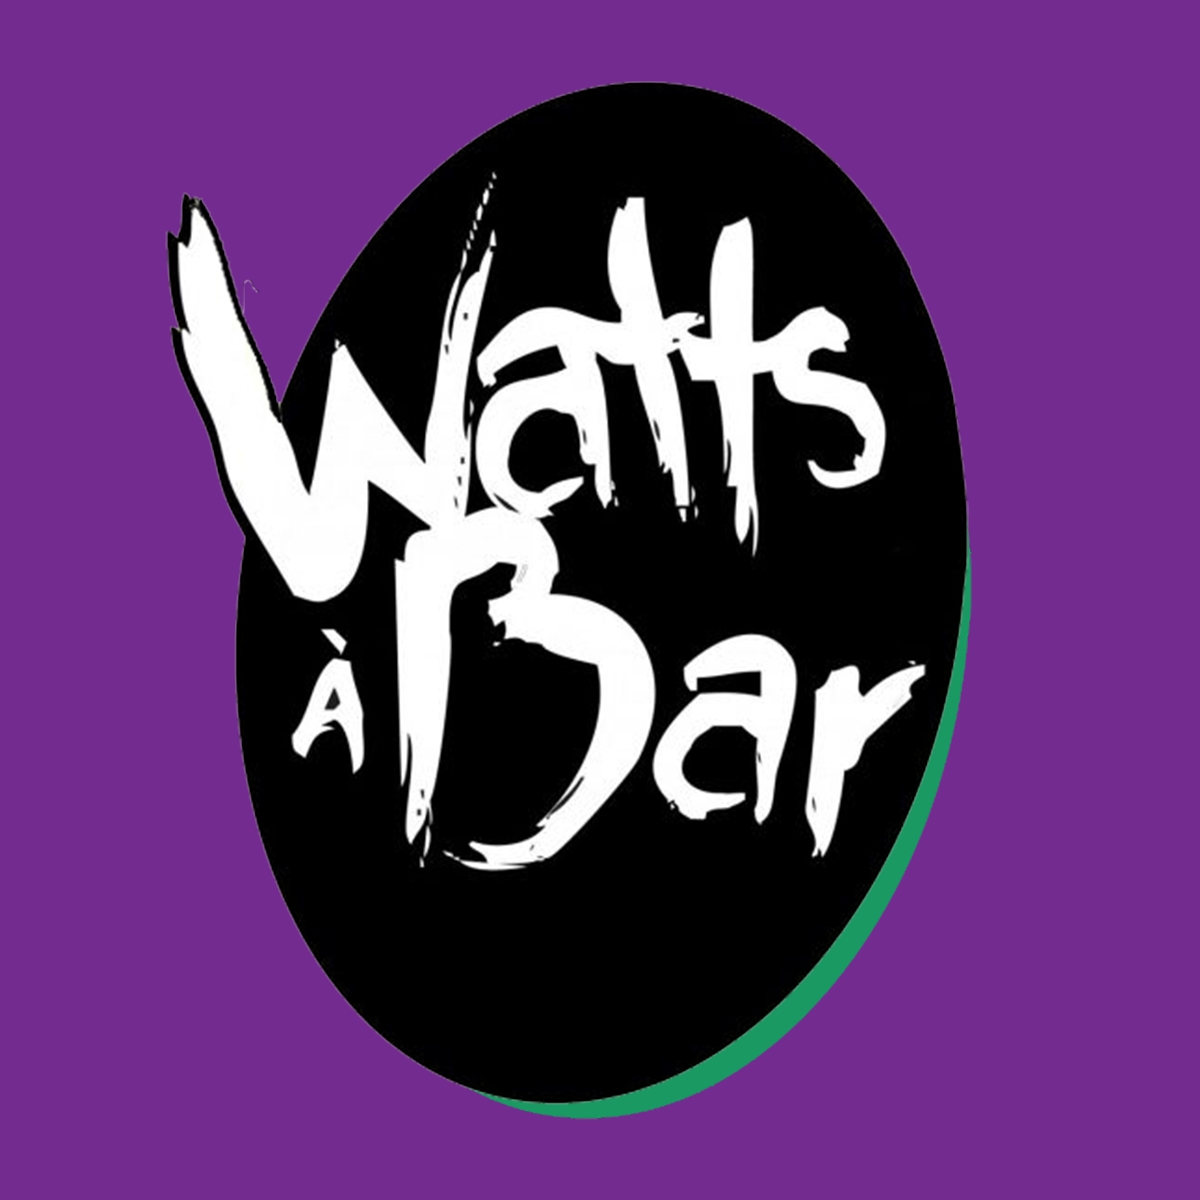 Watts à Bar